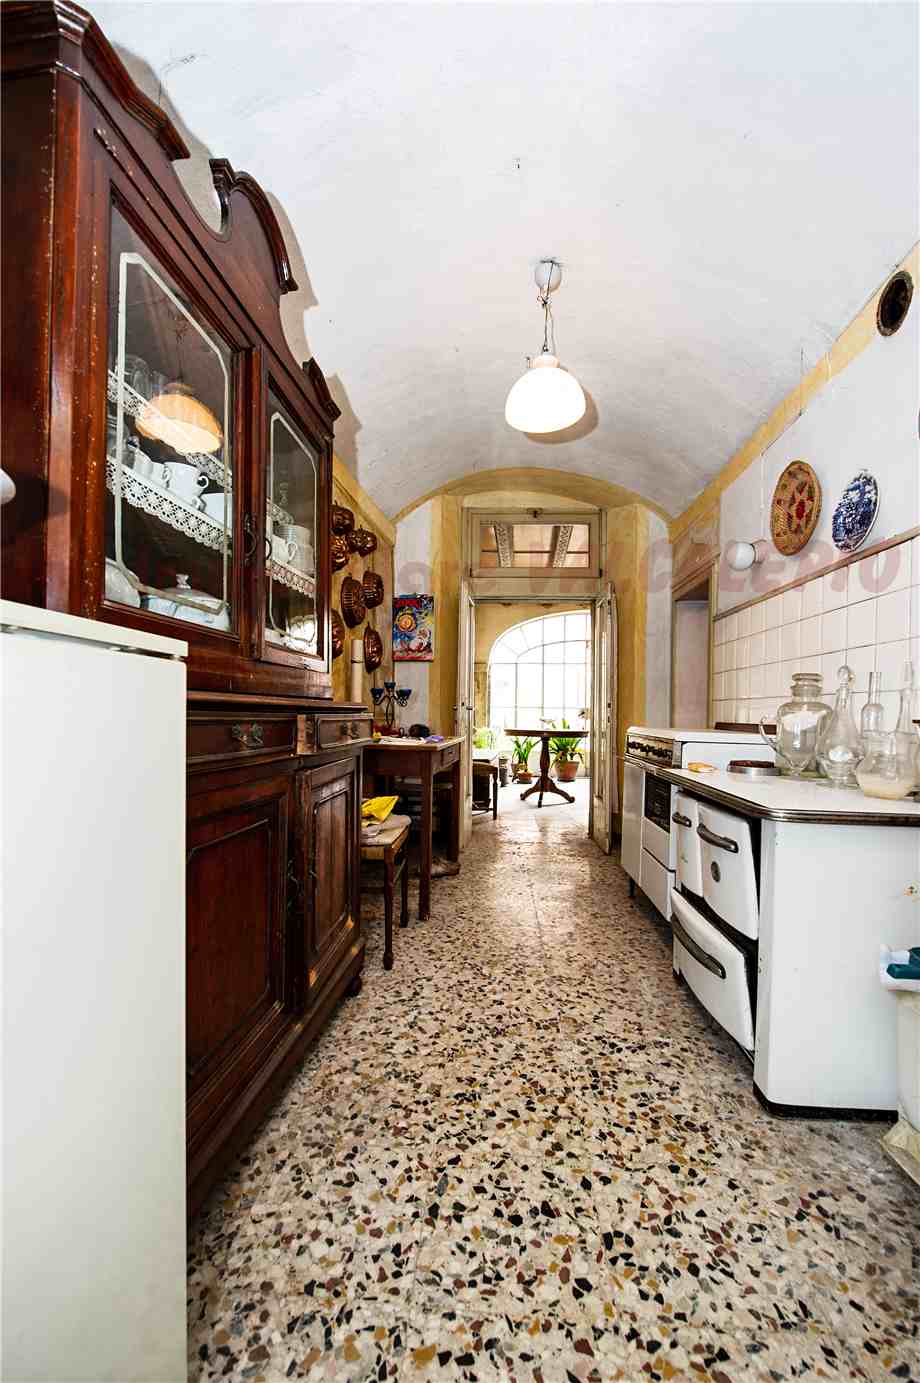 For sale Detached house Castelli Calepio TAGLIUNO #CC301 n.4